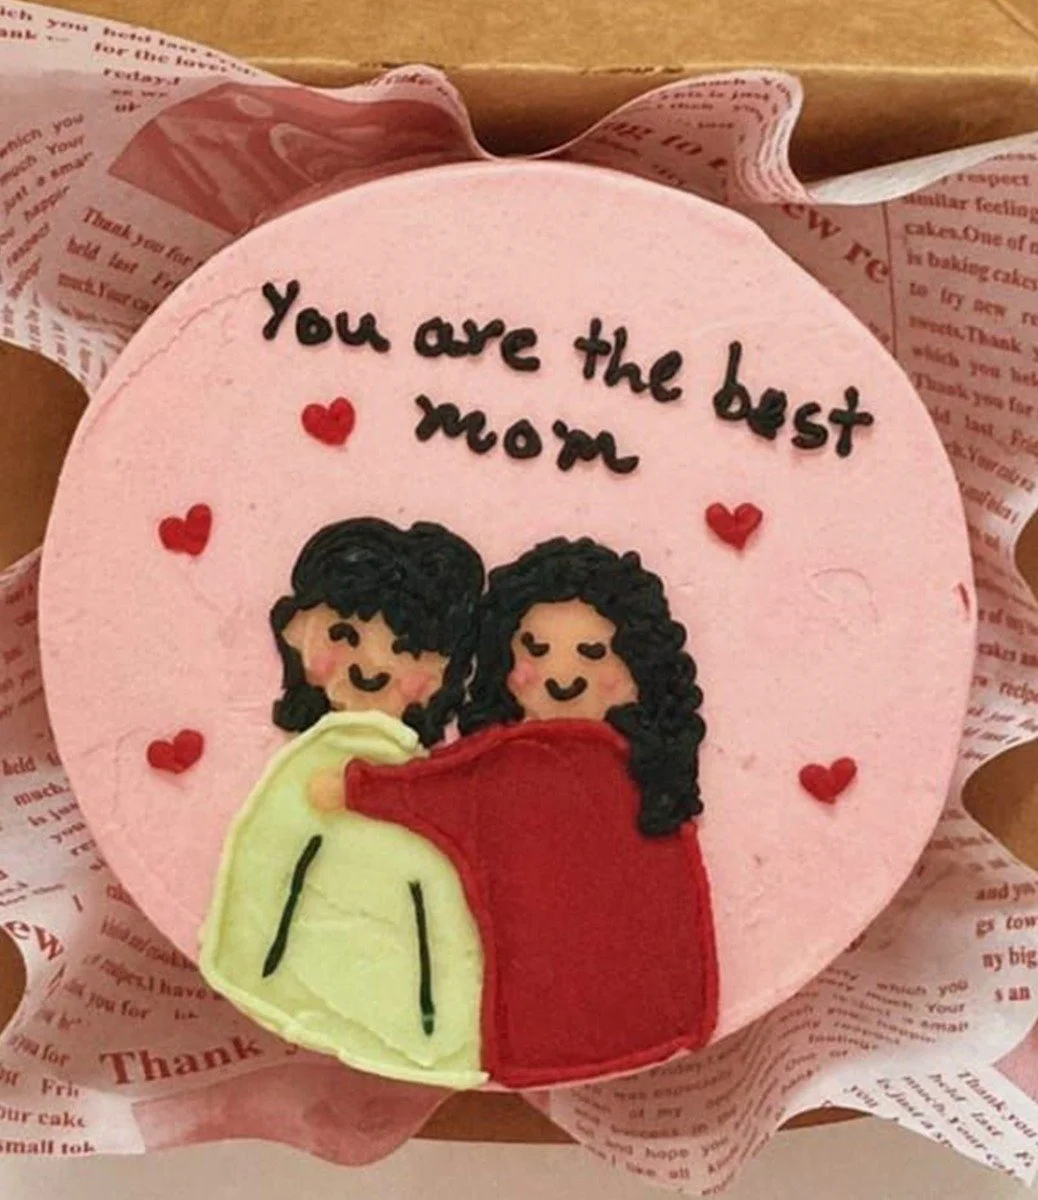 The Best Mom Cake by Mqam Alward